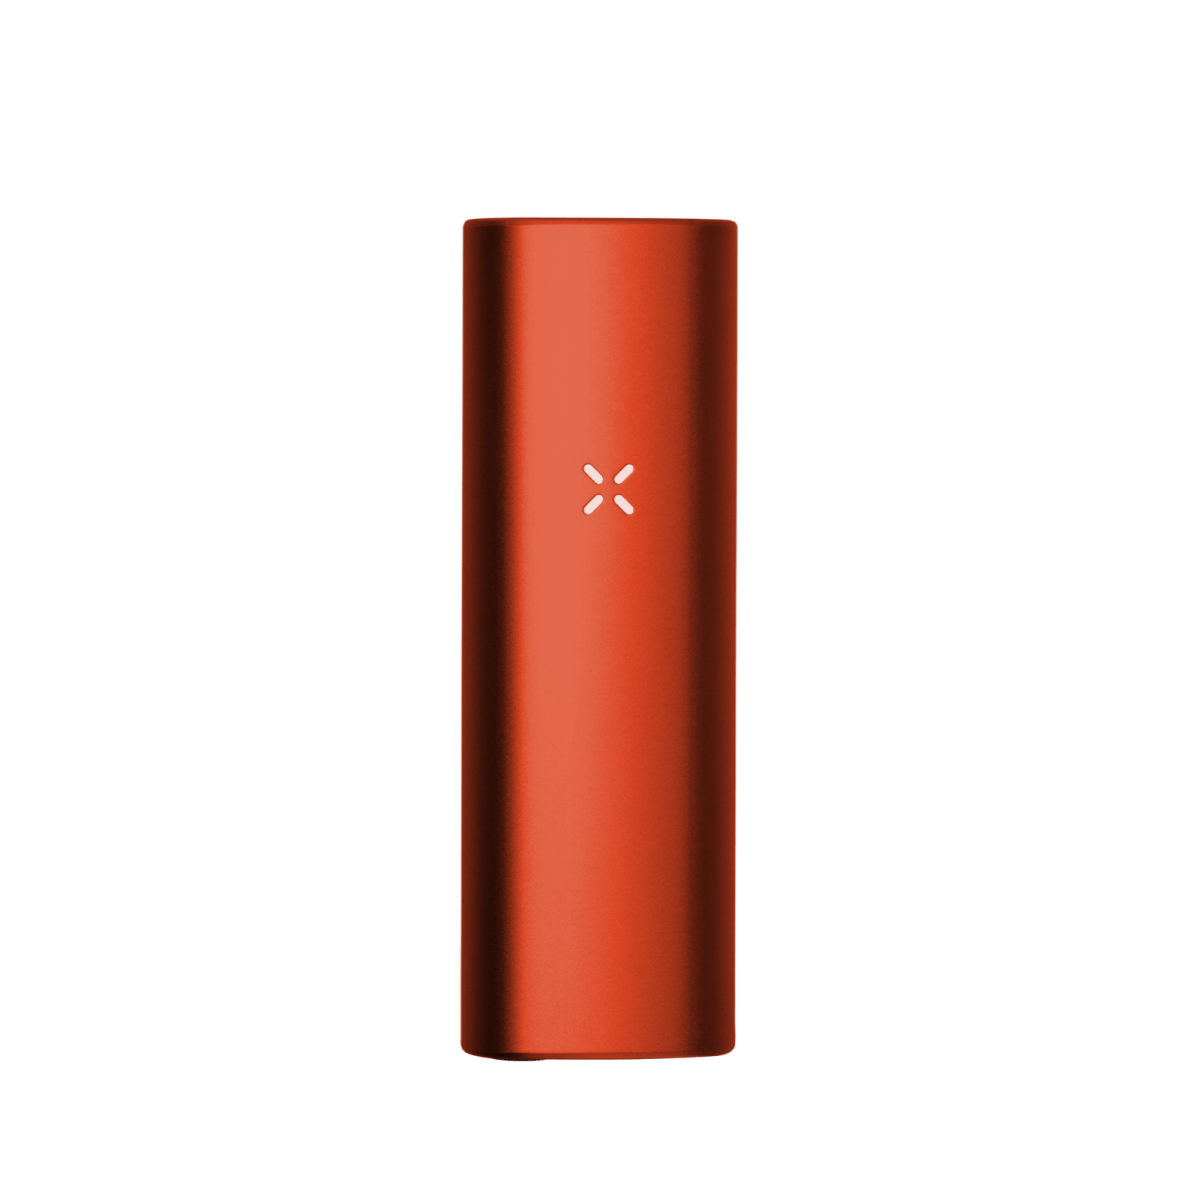 Pax Mini Vaporizer - Poppy (Orange) Vaporizer - EAN 0840005602492 - von vape-dealer.de